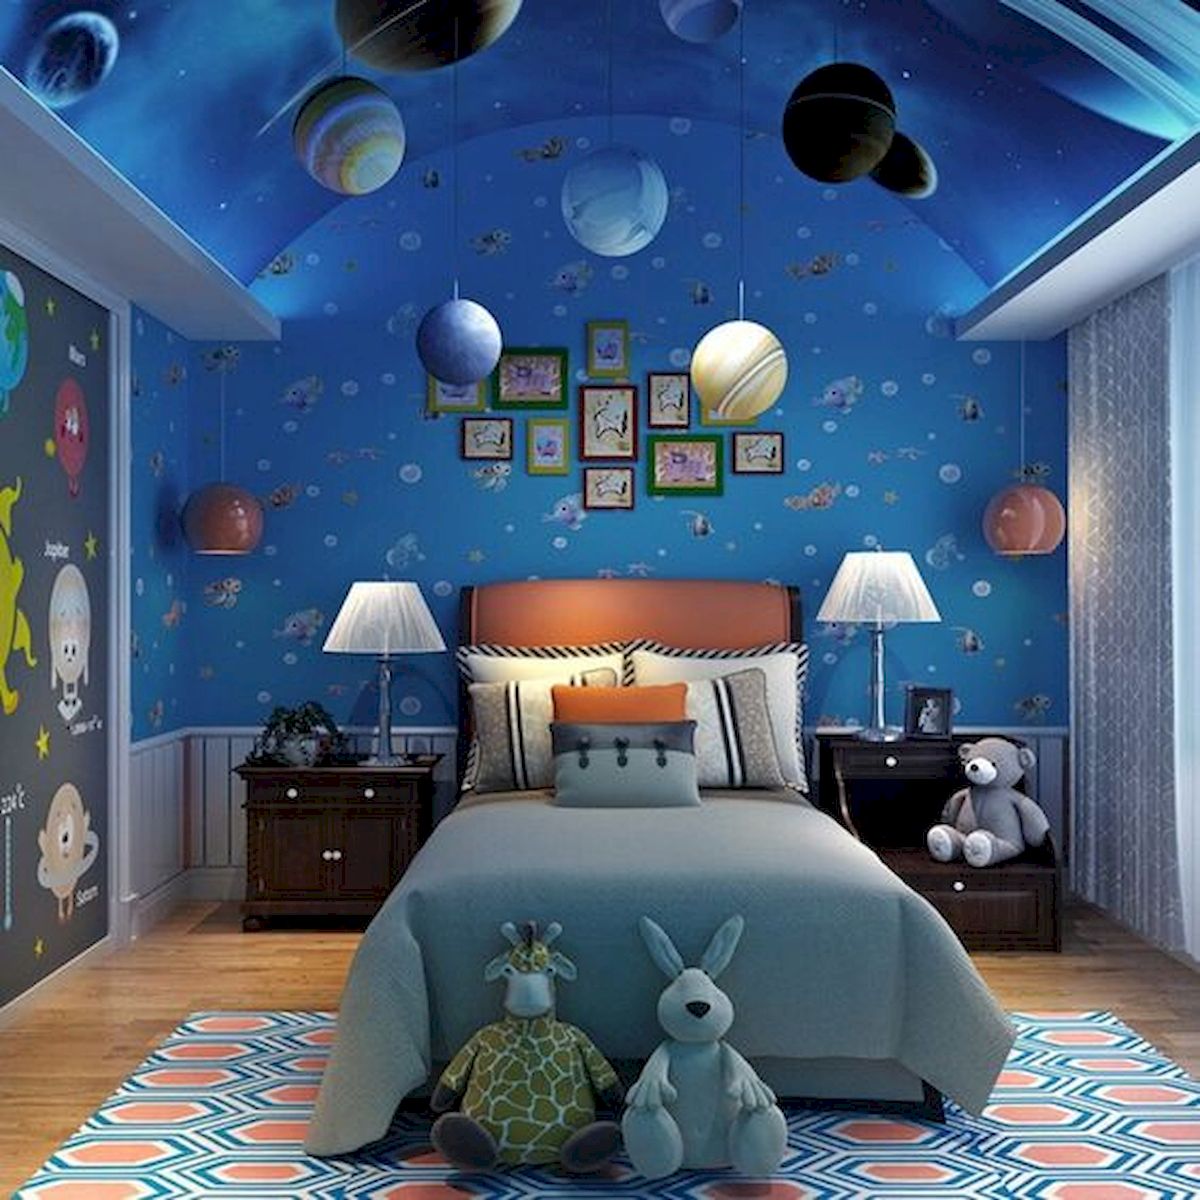 wallpaper for adults bedroom,ceiling,room,bedroom,interior design,blue